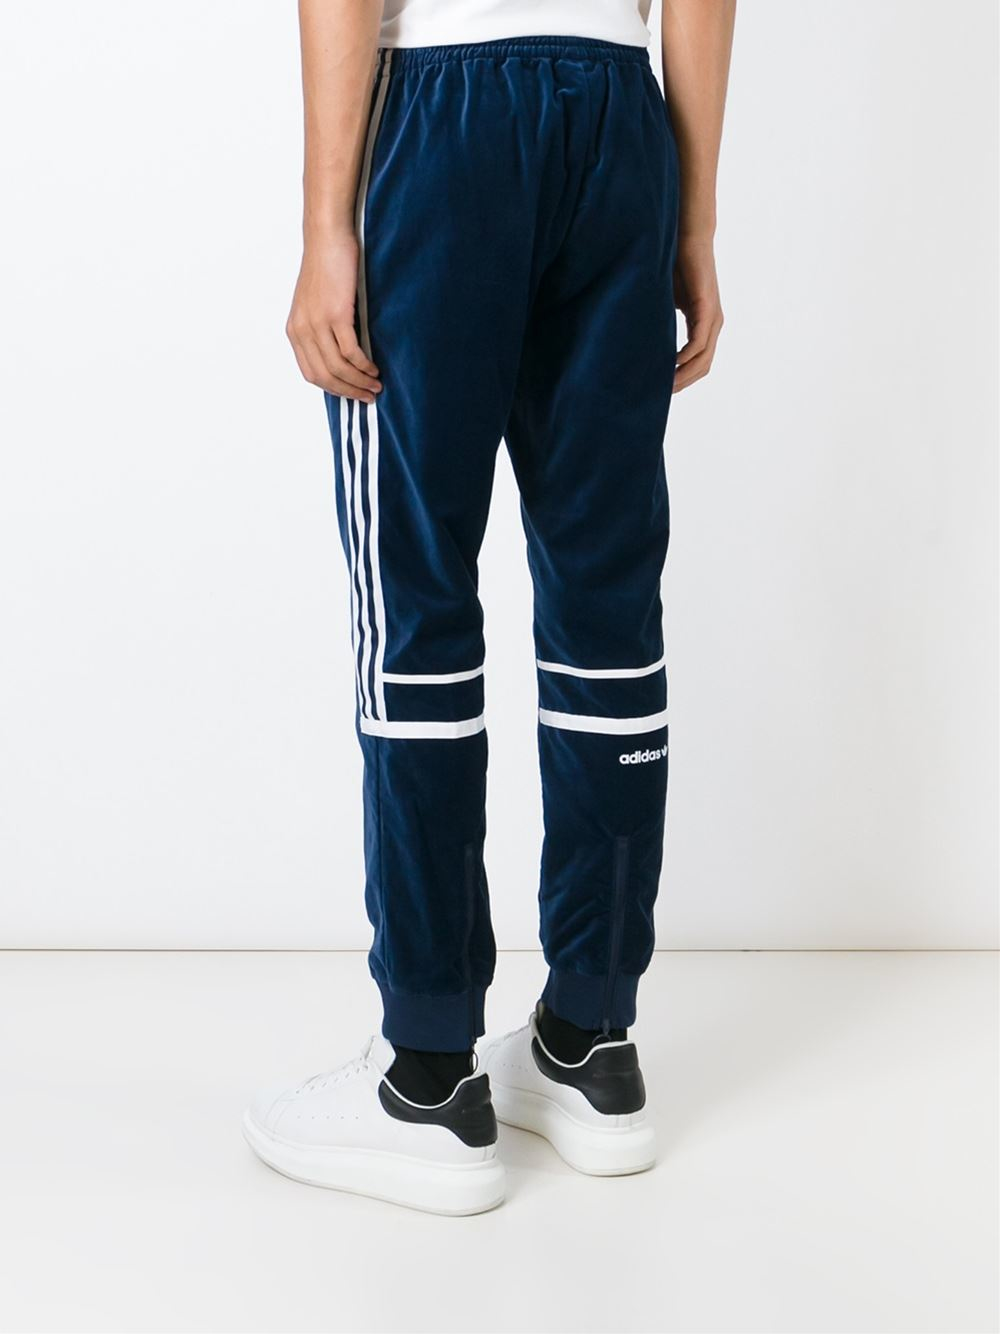 Lyst - Adidas Originals 'clr 84' Track Pants in Blue for Men